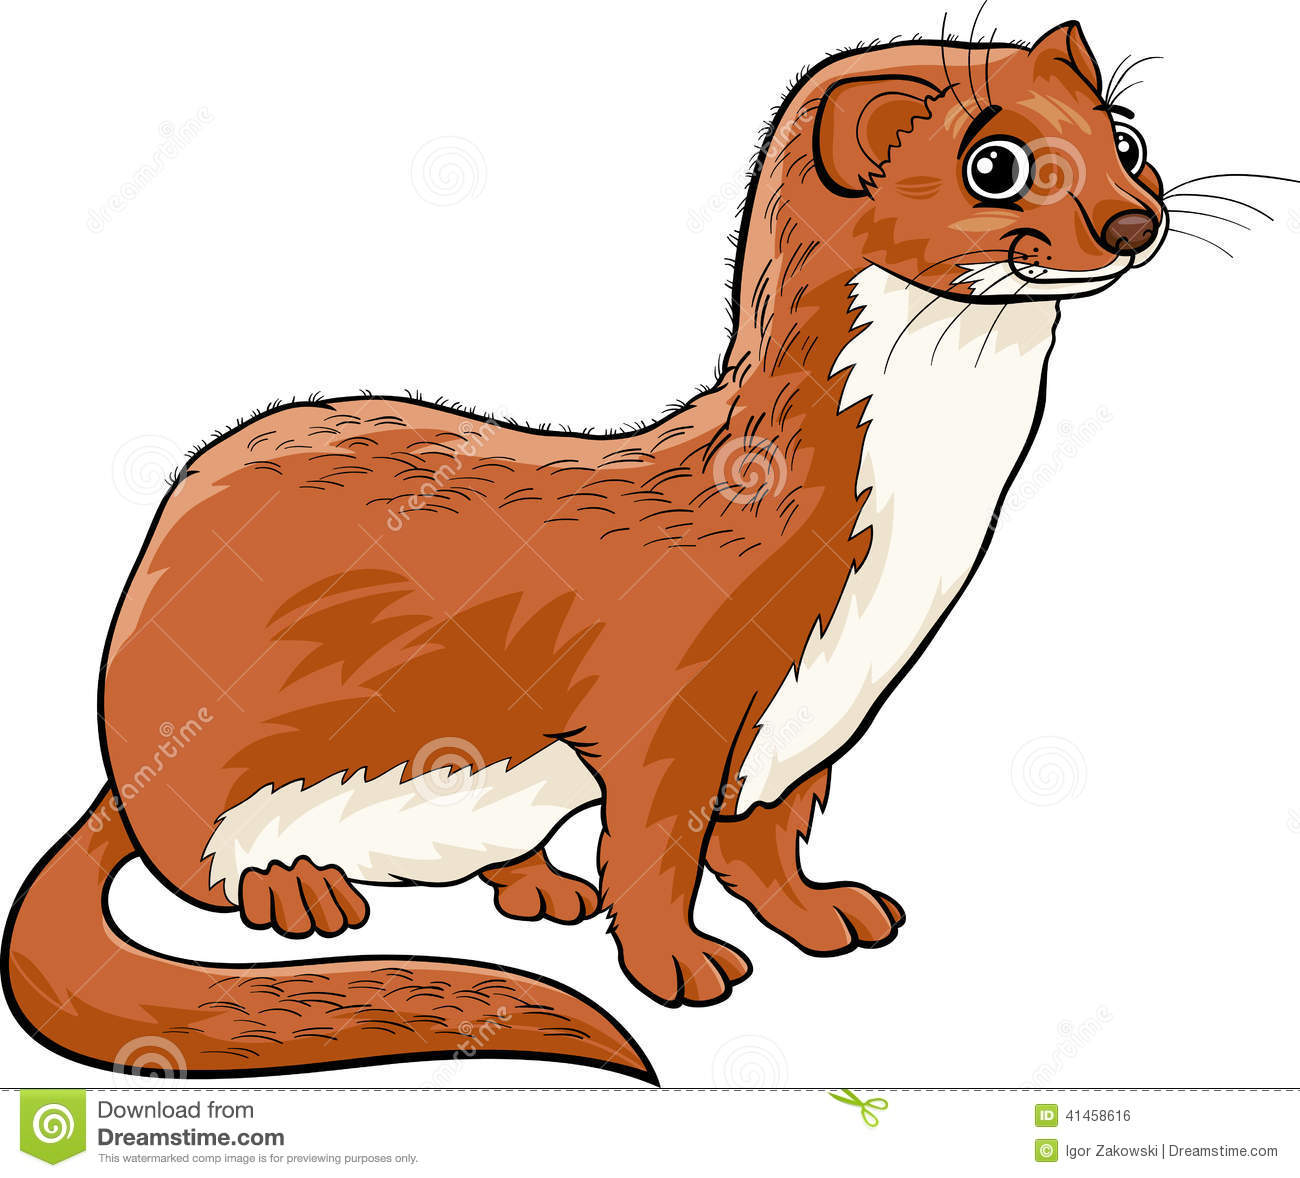 Weasel Animal Cartoon Illustration Stock Vector   Image  41458616